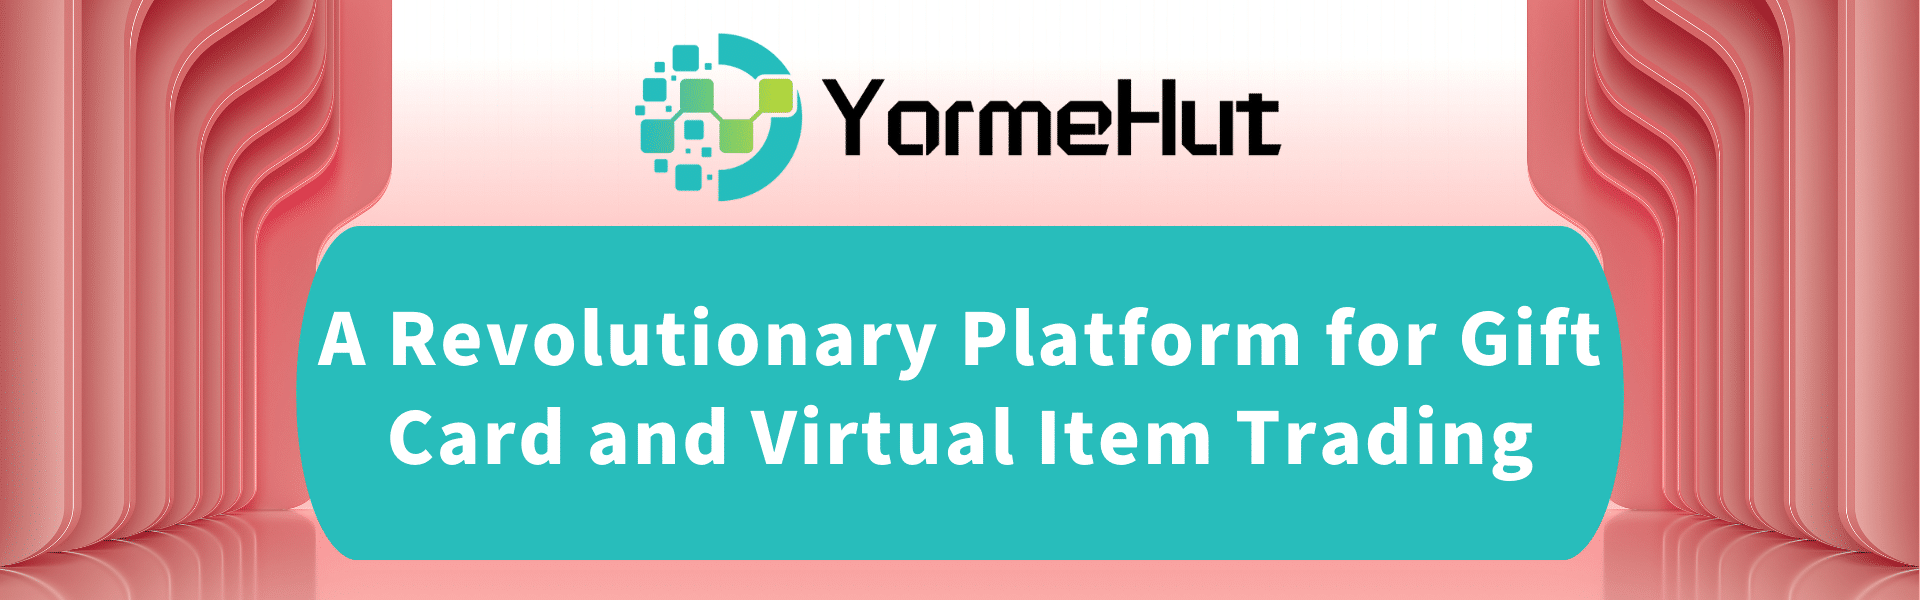 YormeHut A Revolutionary Platform for Gift Card and Virtual Item Trading